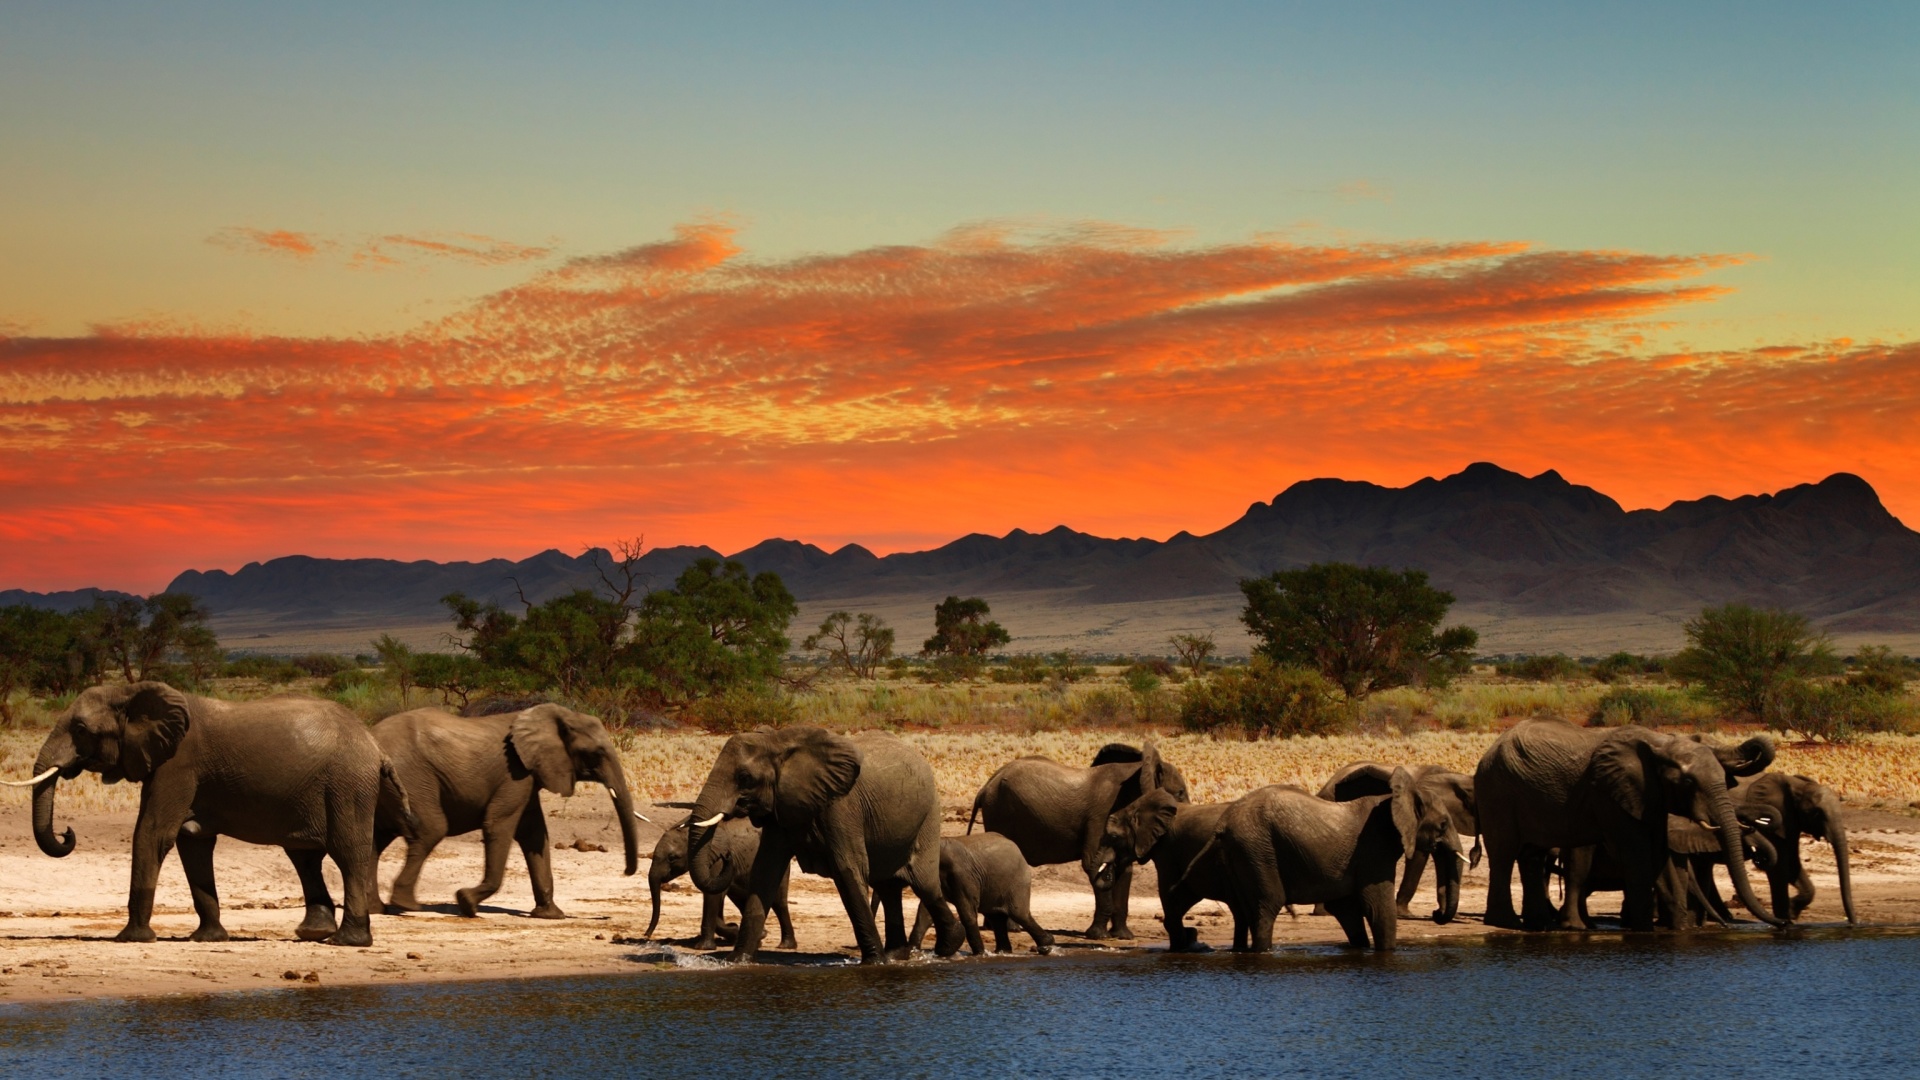 Das Herd of elephants Safari Wallpaper 1920x1080